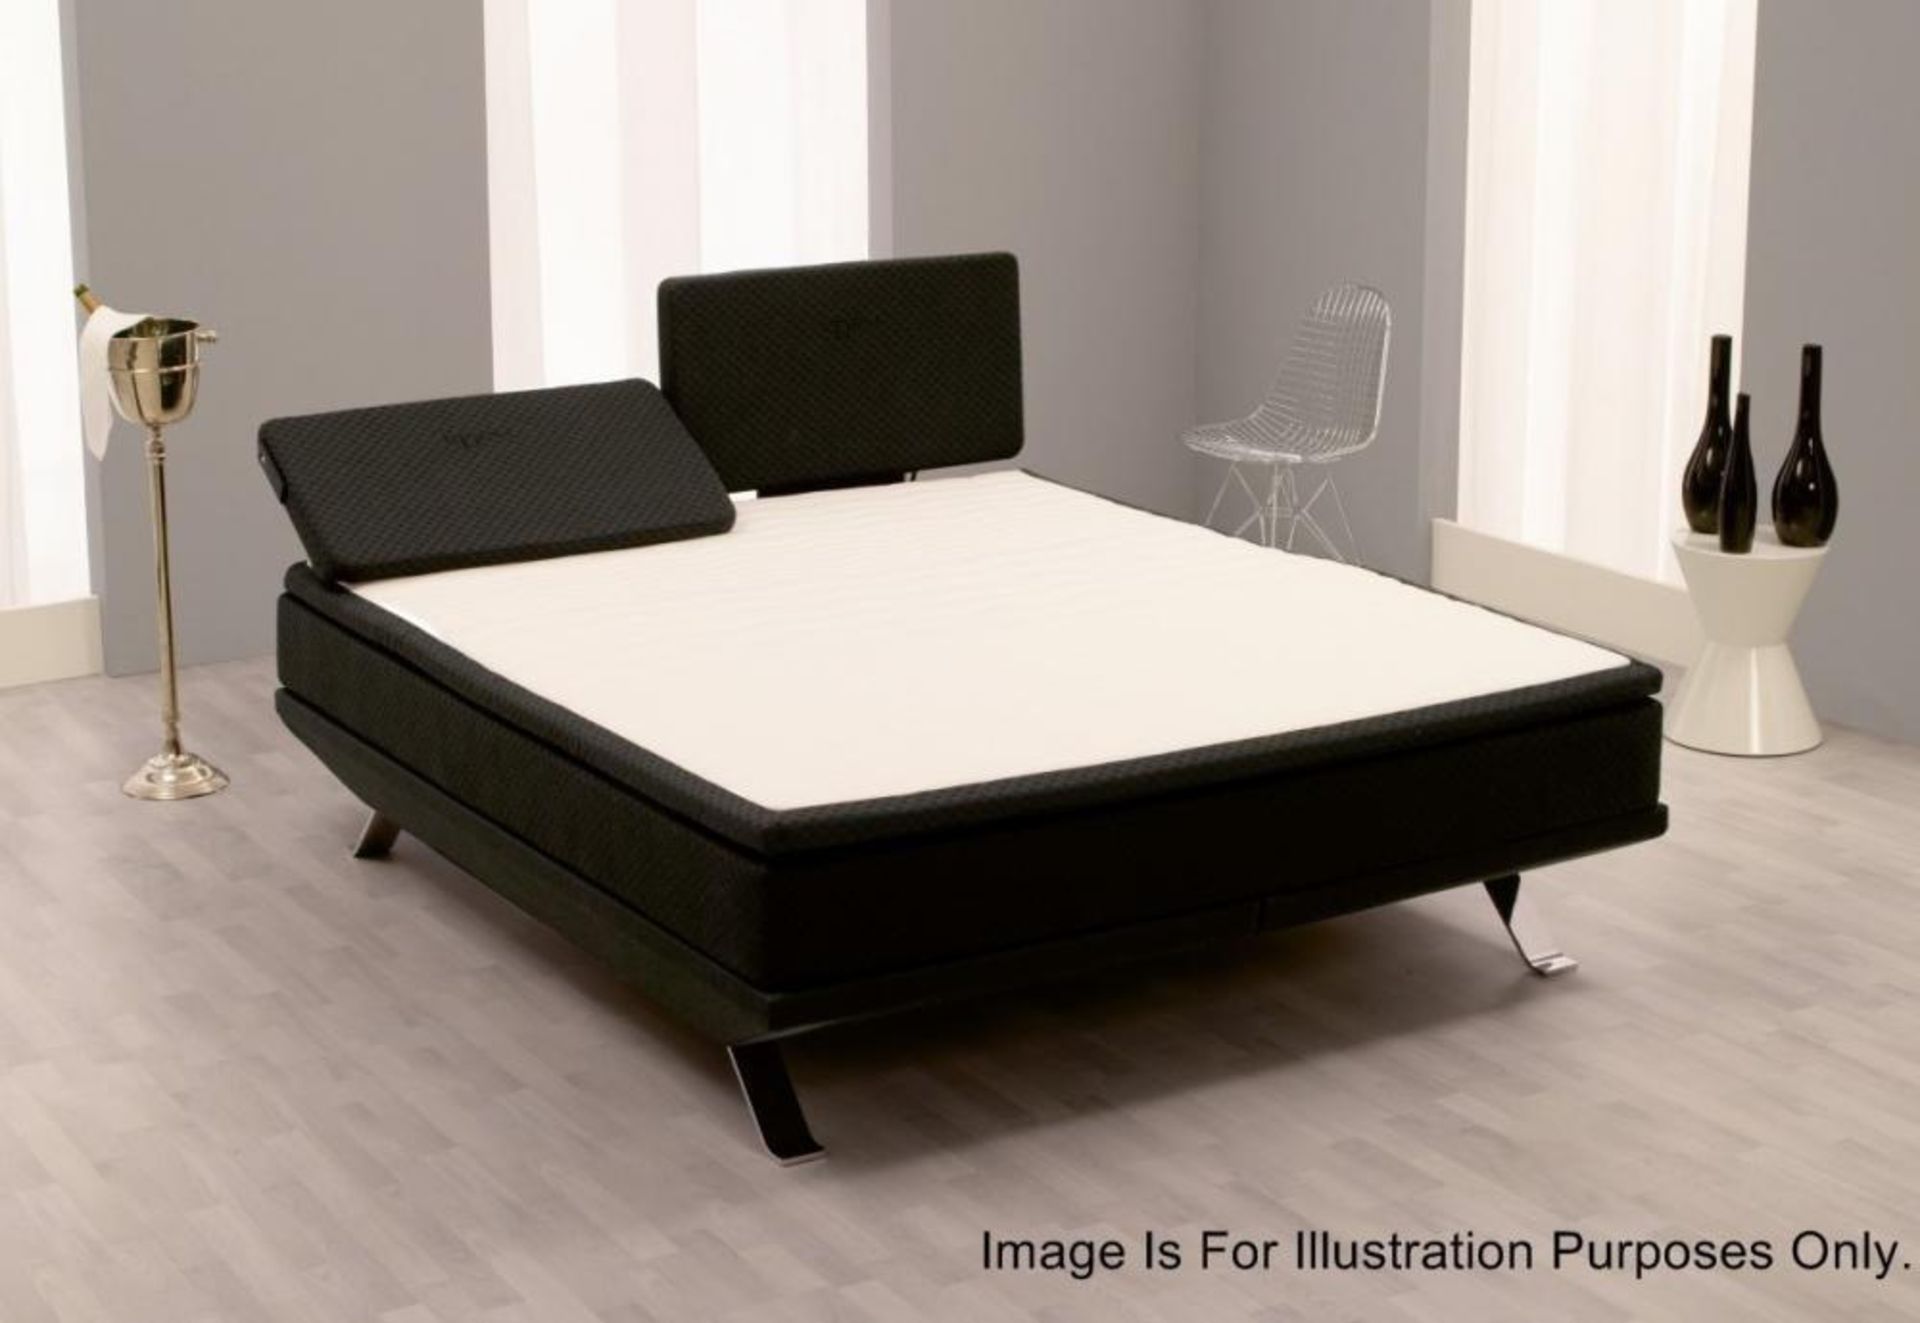 1 x Jensen EDEN Adjustable Superking Bed Base - W180 x L210 x H34cm - Colour: Black - CL087 - Ref: - Image 4 of 13